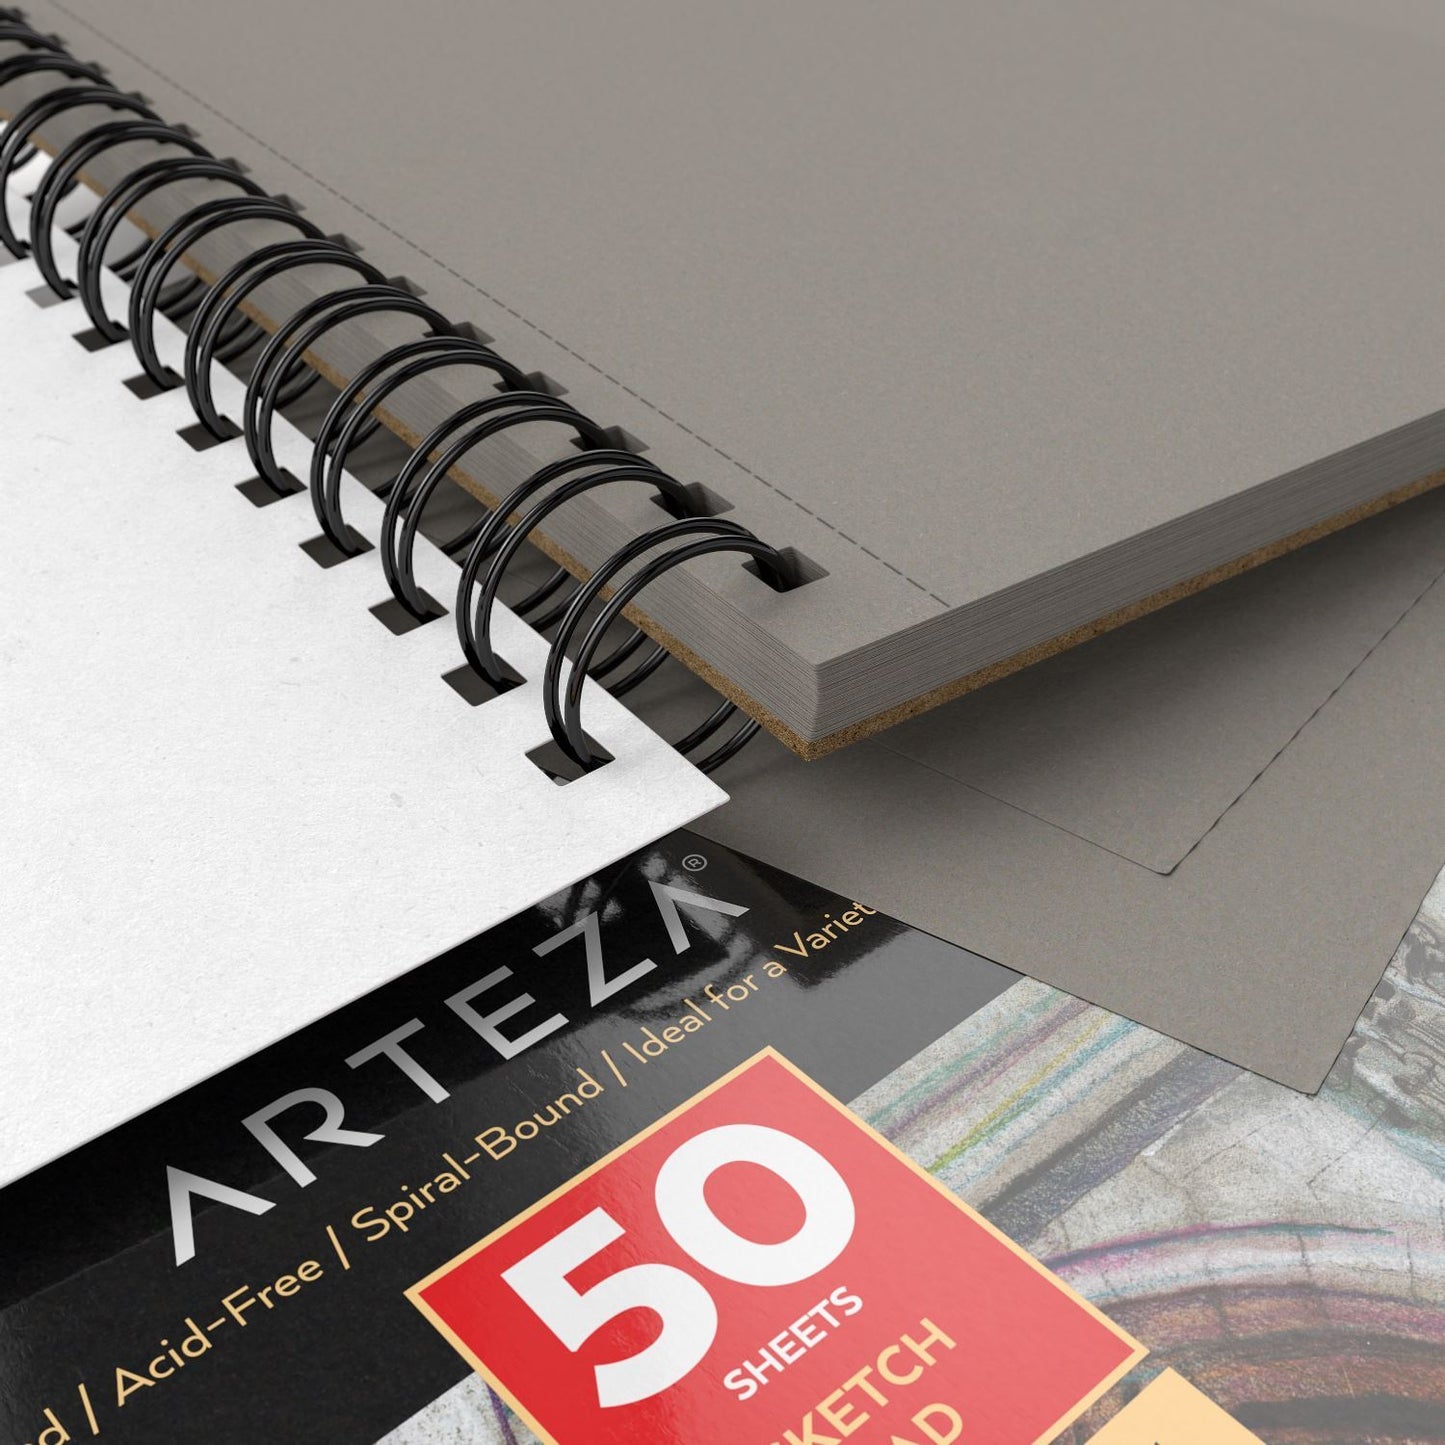 H8 Grey Toned Multi-Media Sketchbook (4x6) – Cottonwood Arts